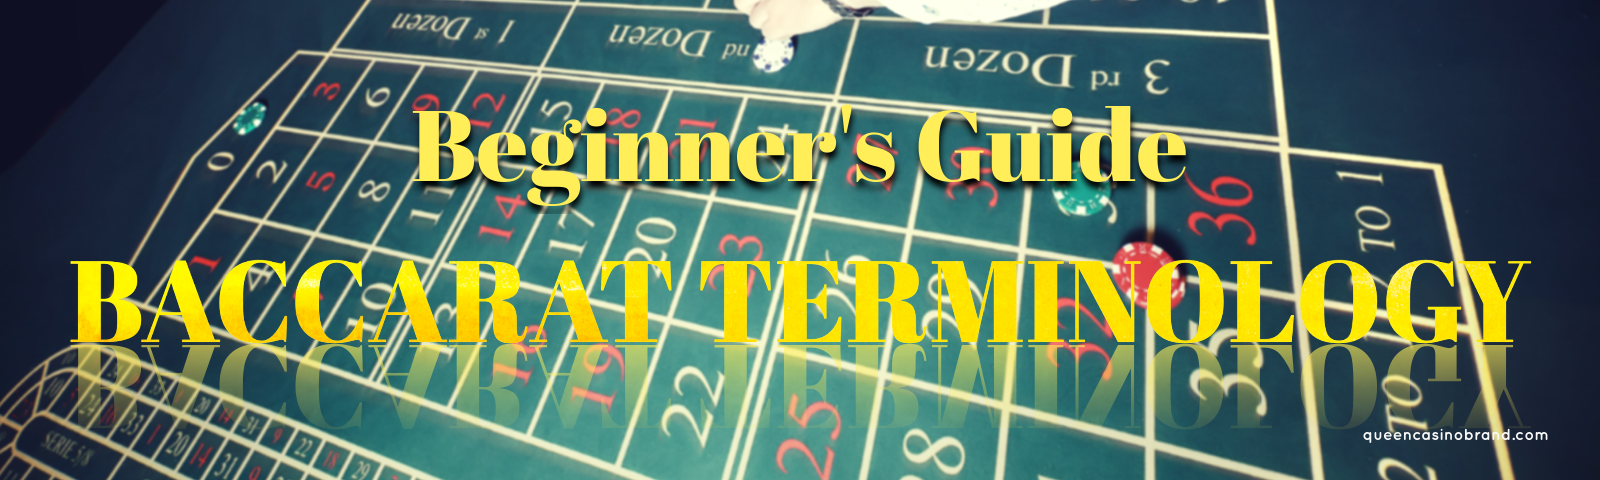 Baccarat Terminology: Beginner's Guide | Queen Casino Brand